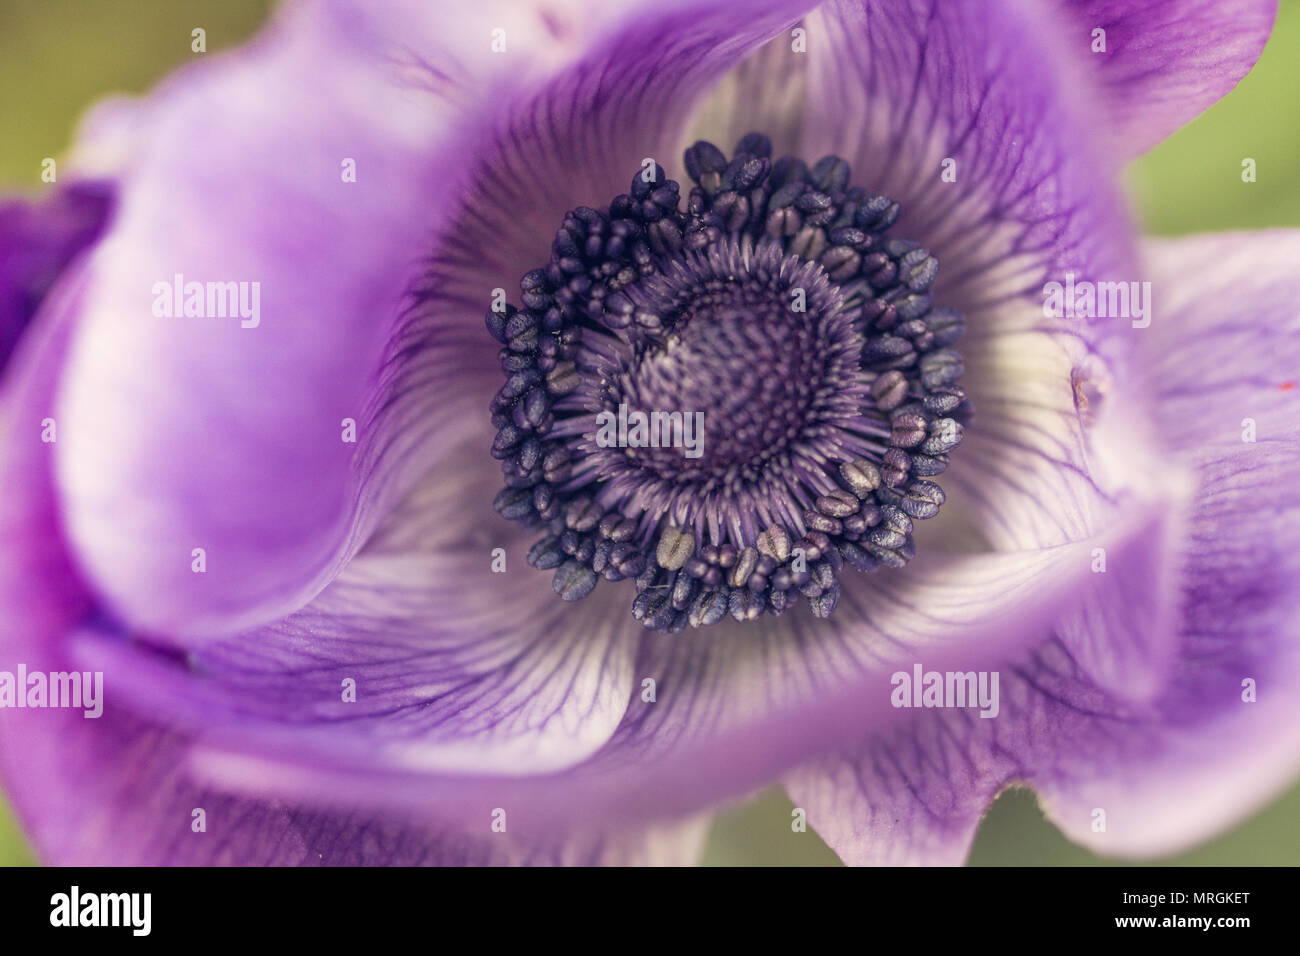 Purple poppy flower, macro shot with details Stock Photo